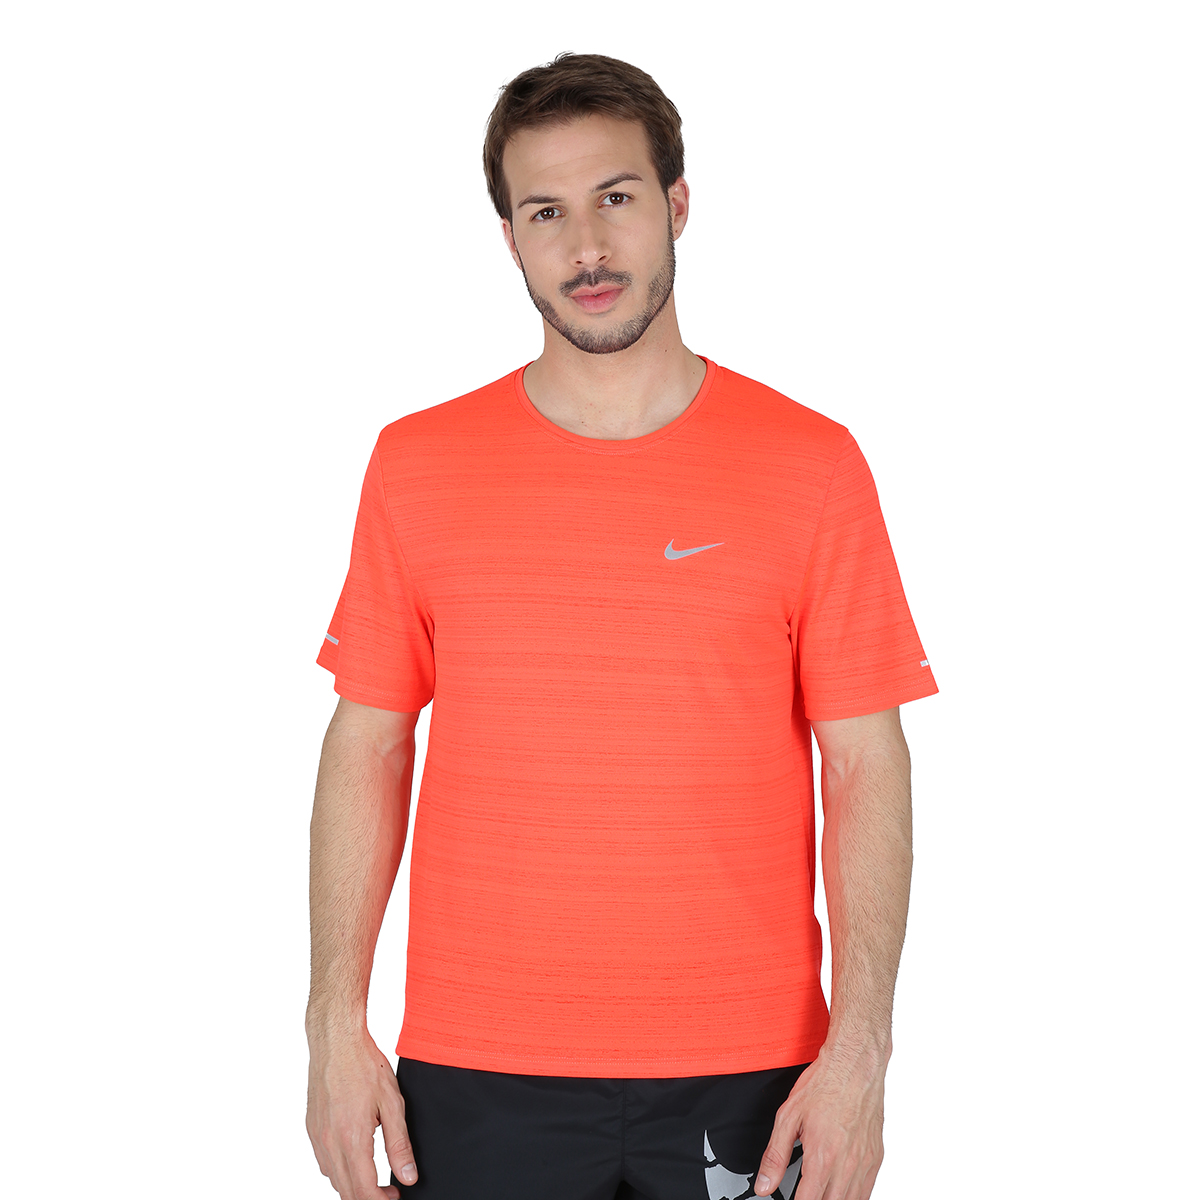 Remera Padel Hombre Tenis Deportiva Camiseta Running Correr